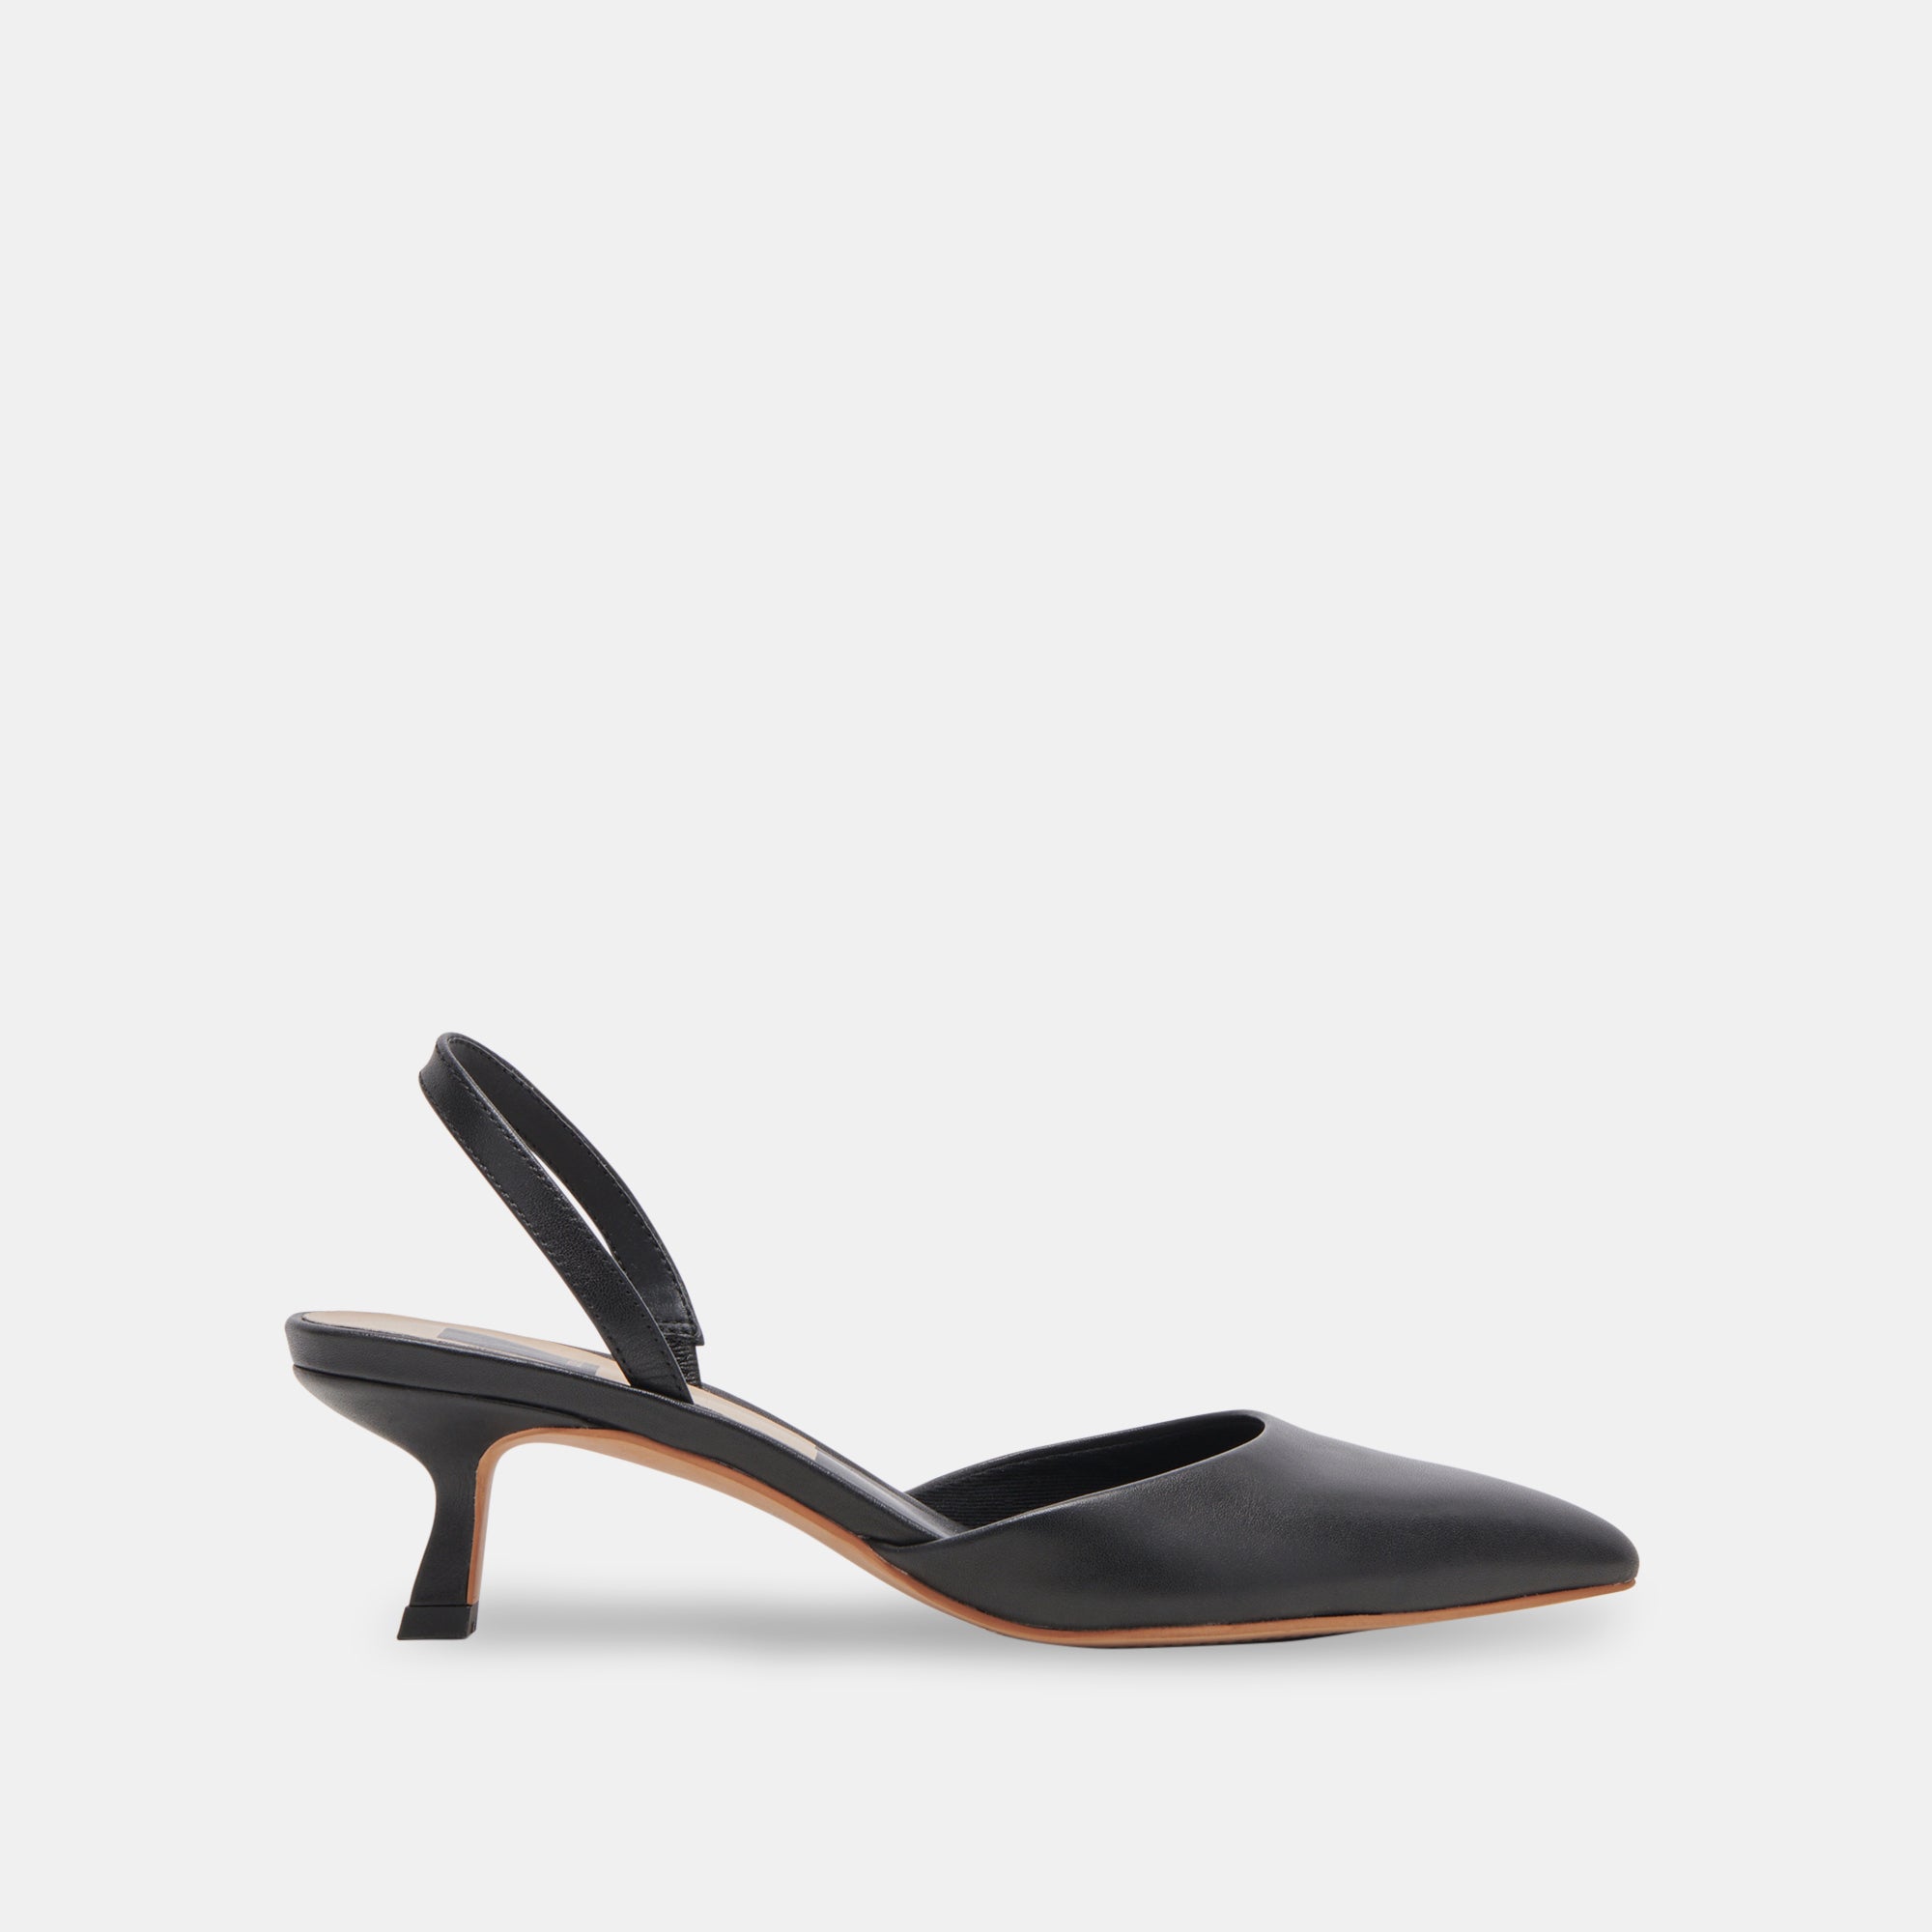 Women's Dance Shoes Standard Latin Heels Closed Toe Rubber Sole, black, 5  UK: Amazon.co.uk: Fashion